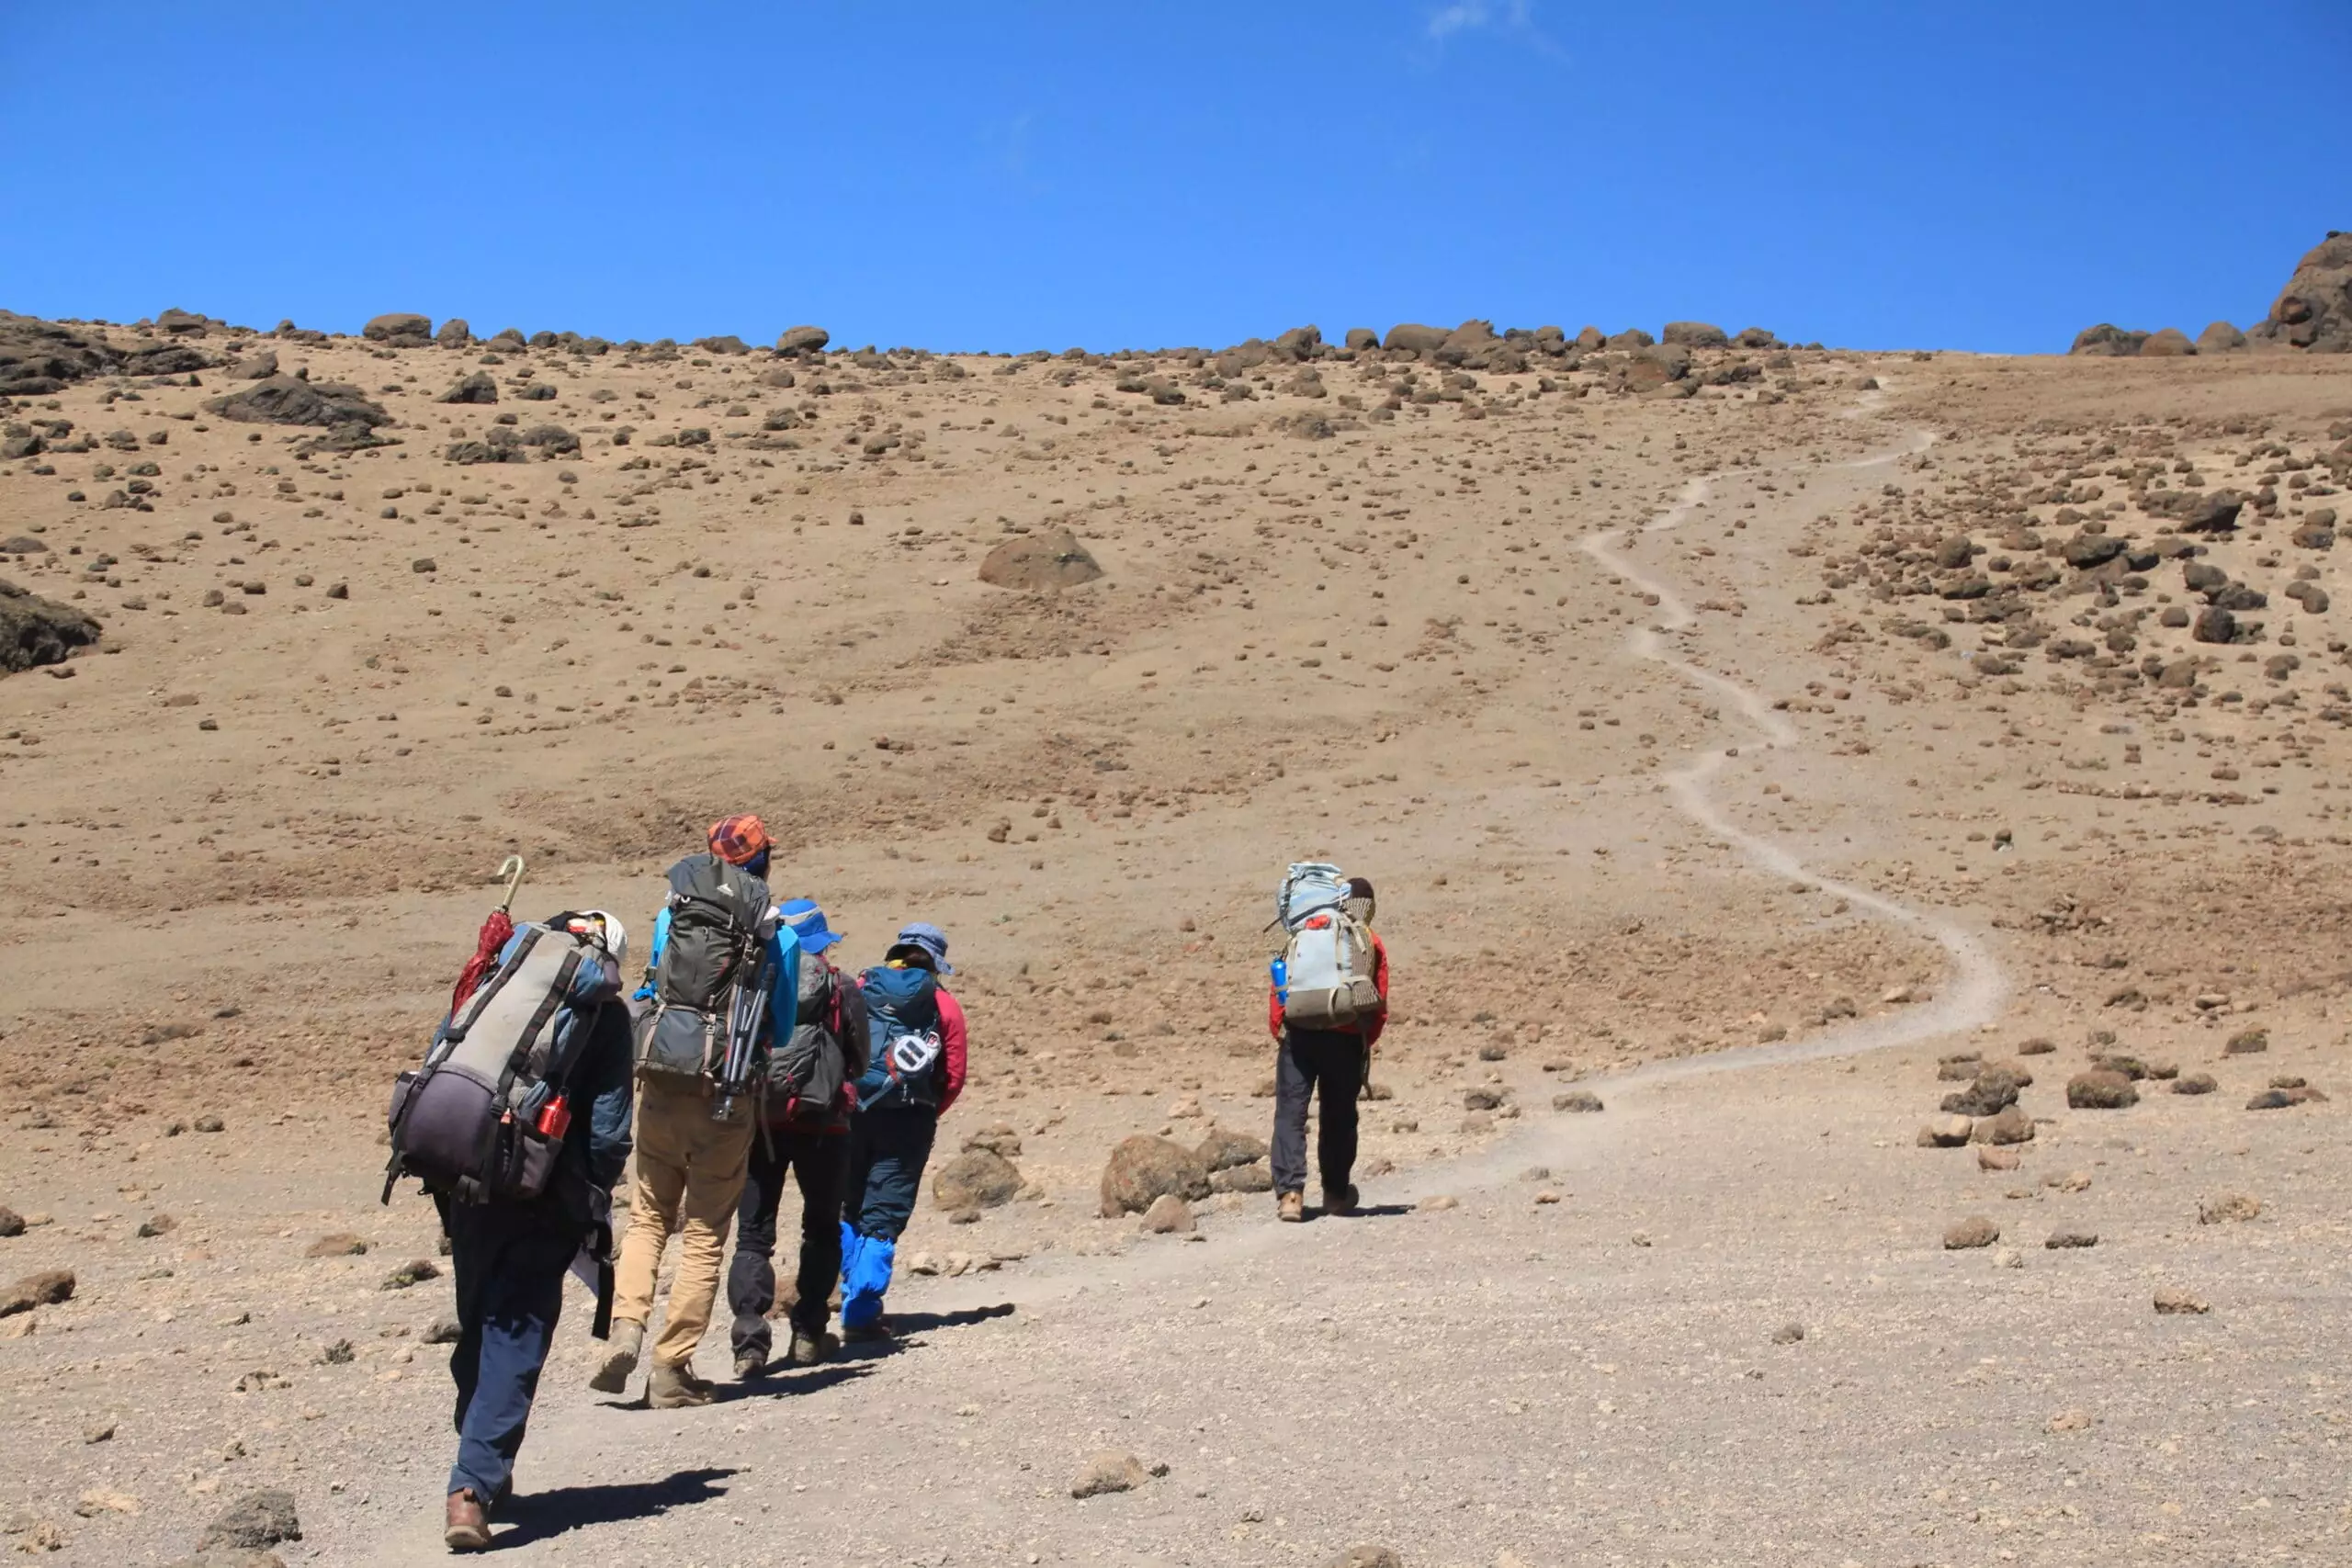 climb Kilimanjaro